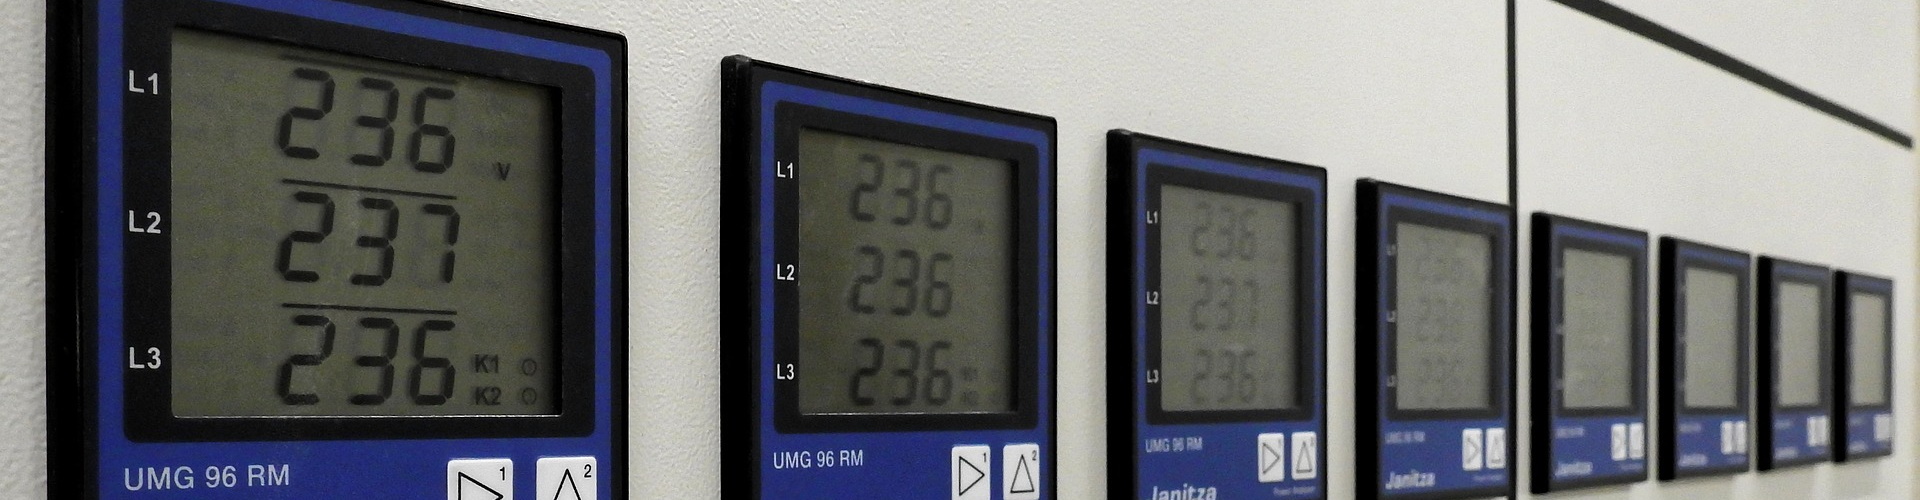 Panel meter